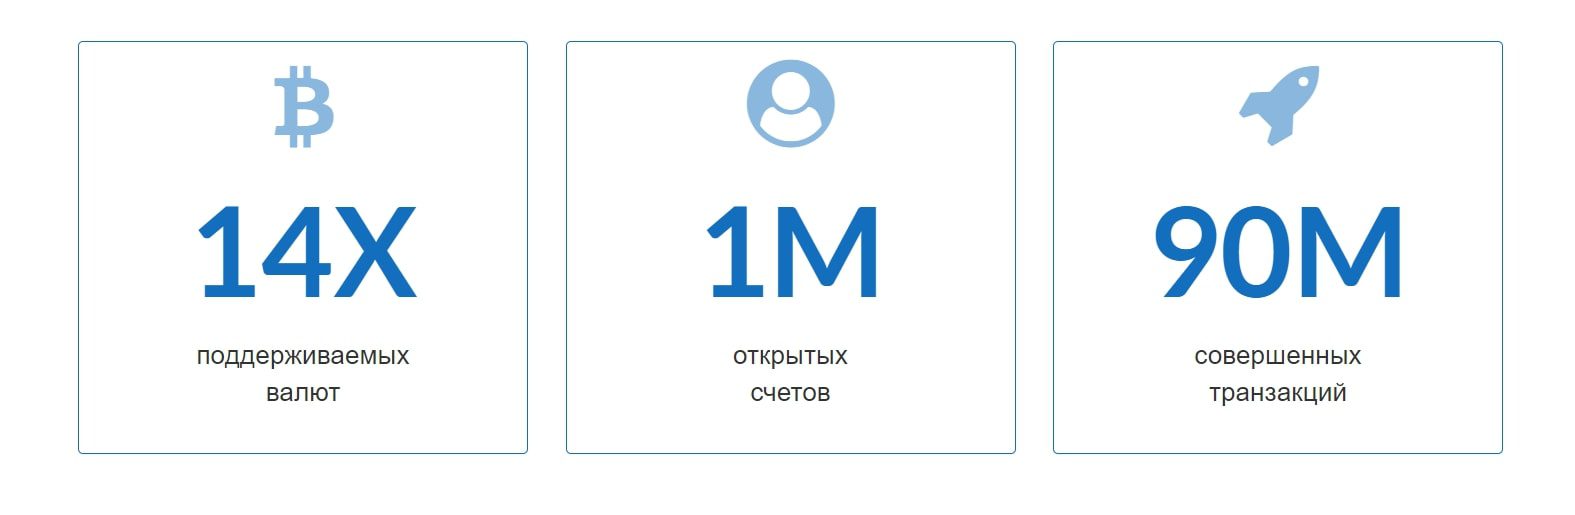 Onepay365.ru статистика